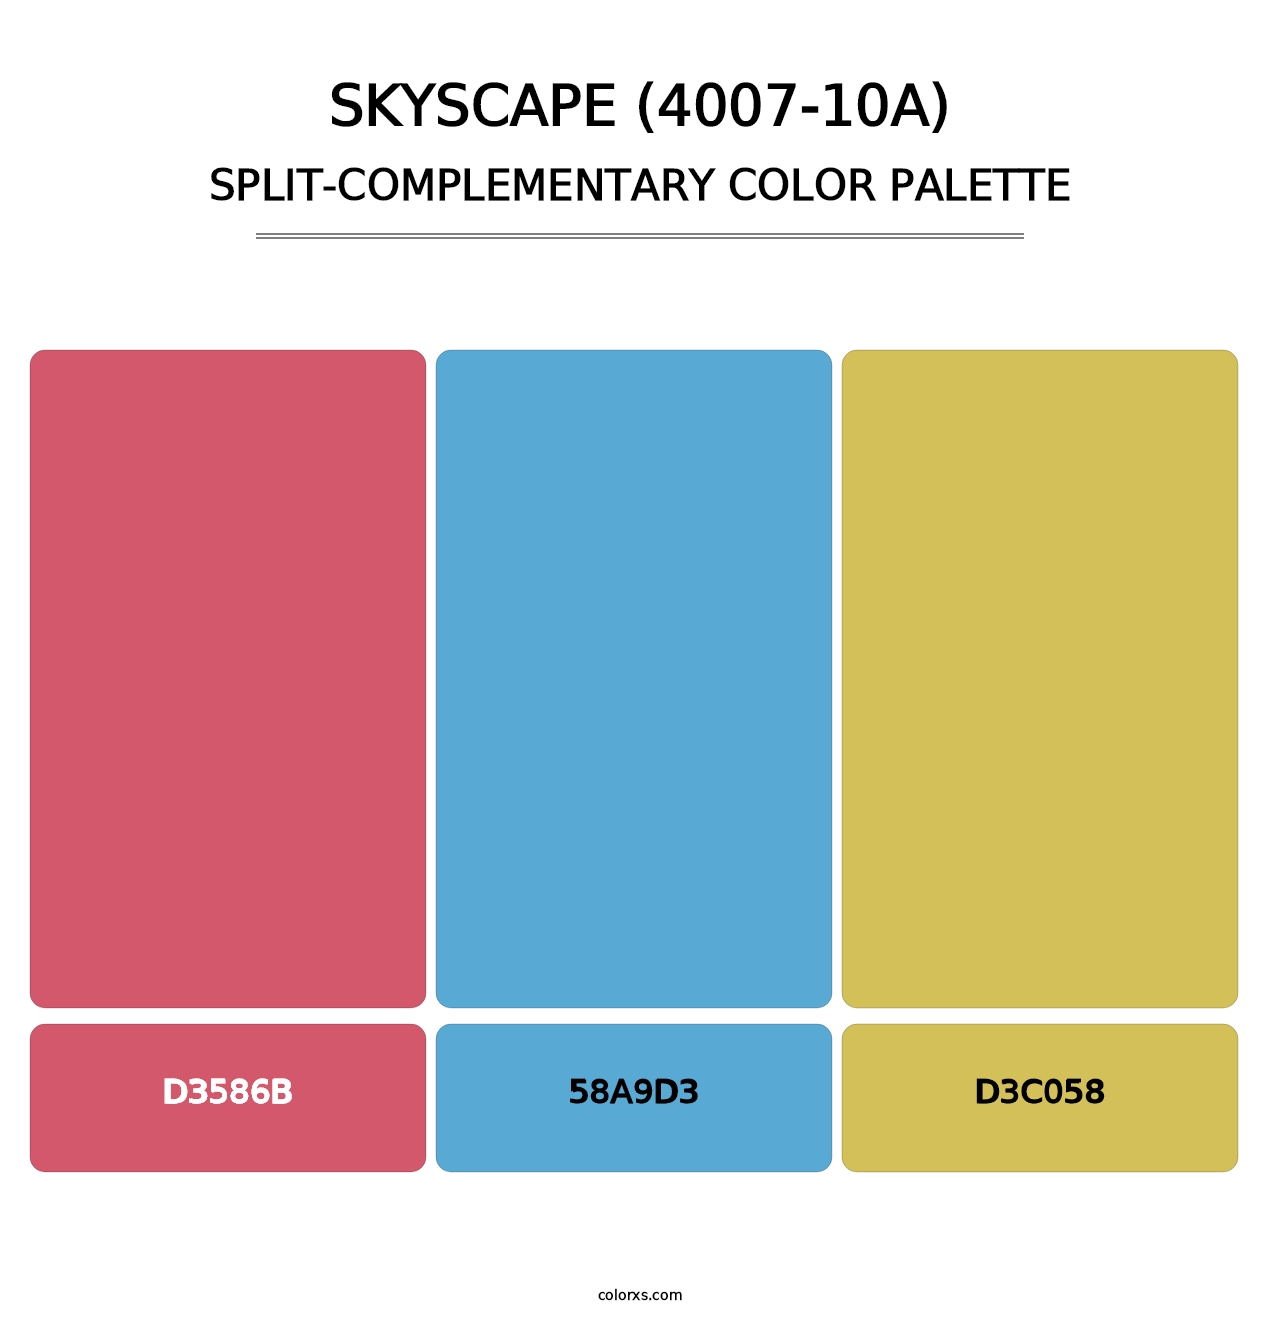 Skyscape (4007-10A) - Split-Complementary Color Palette